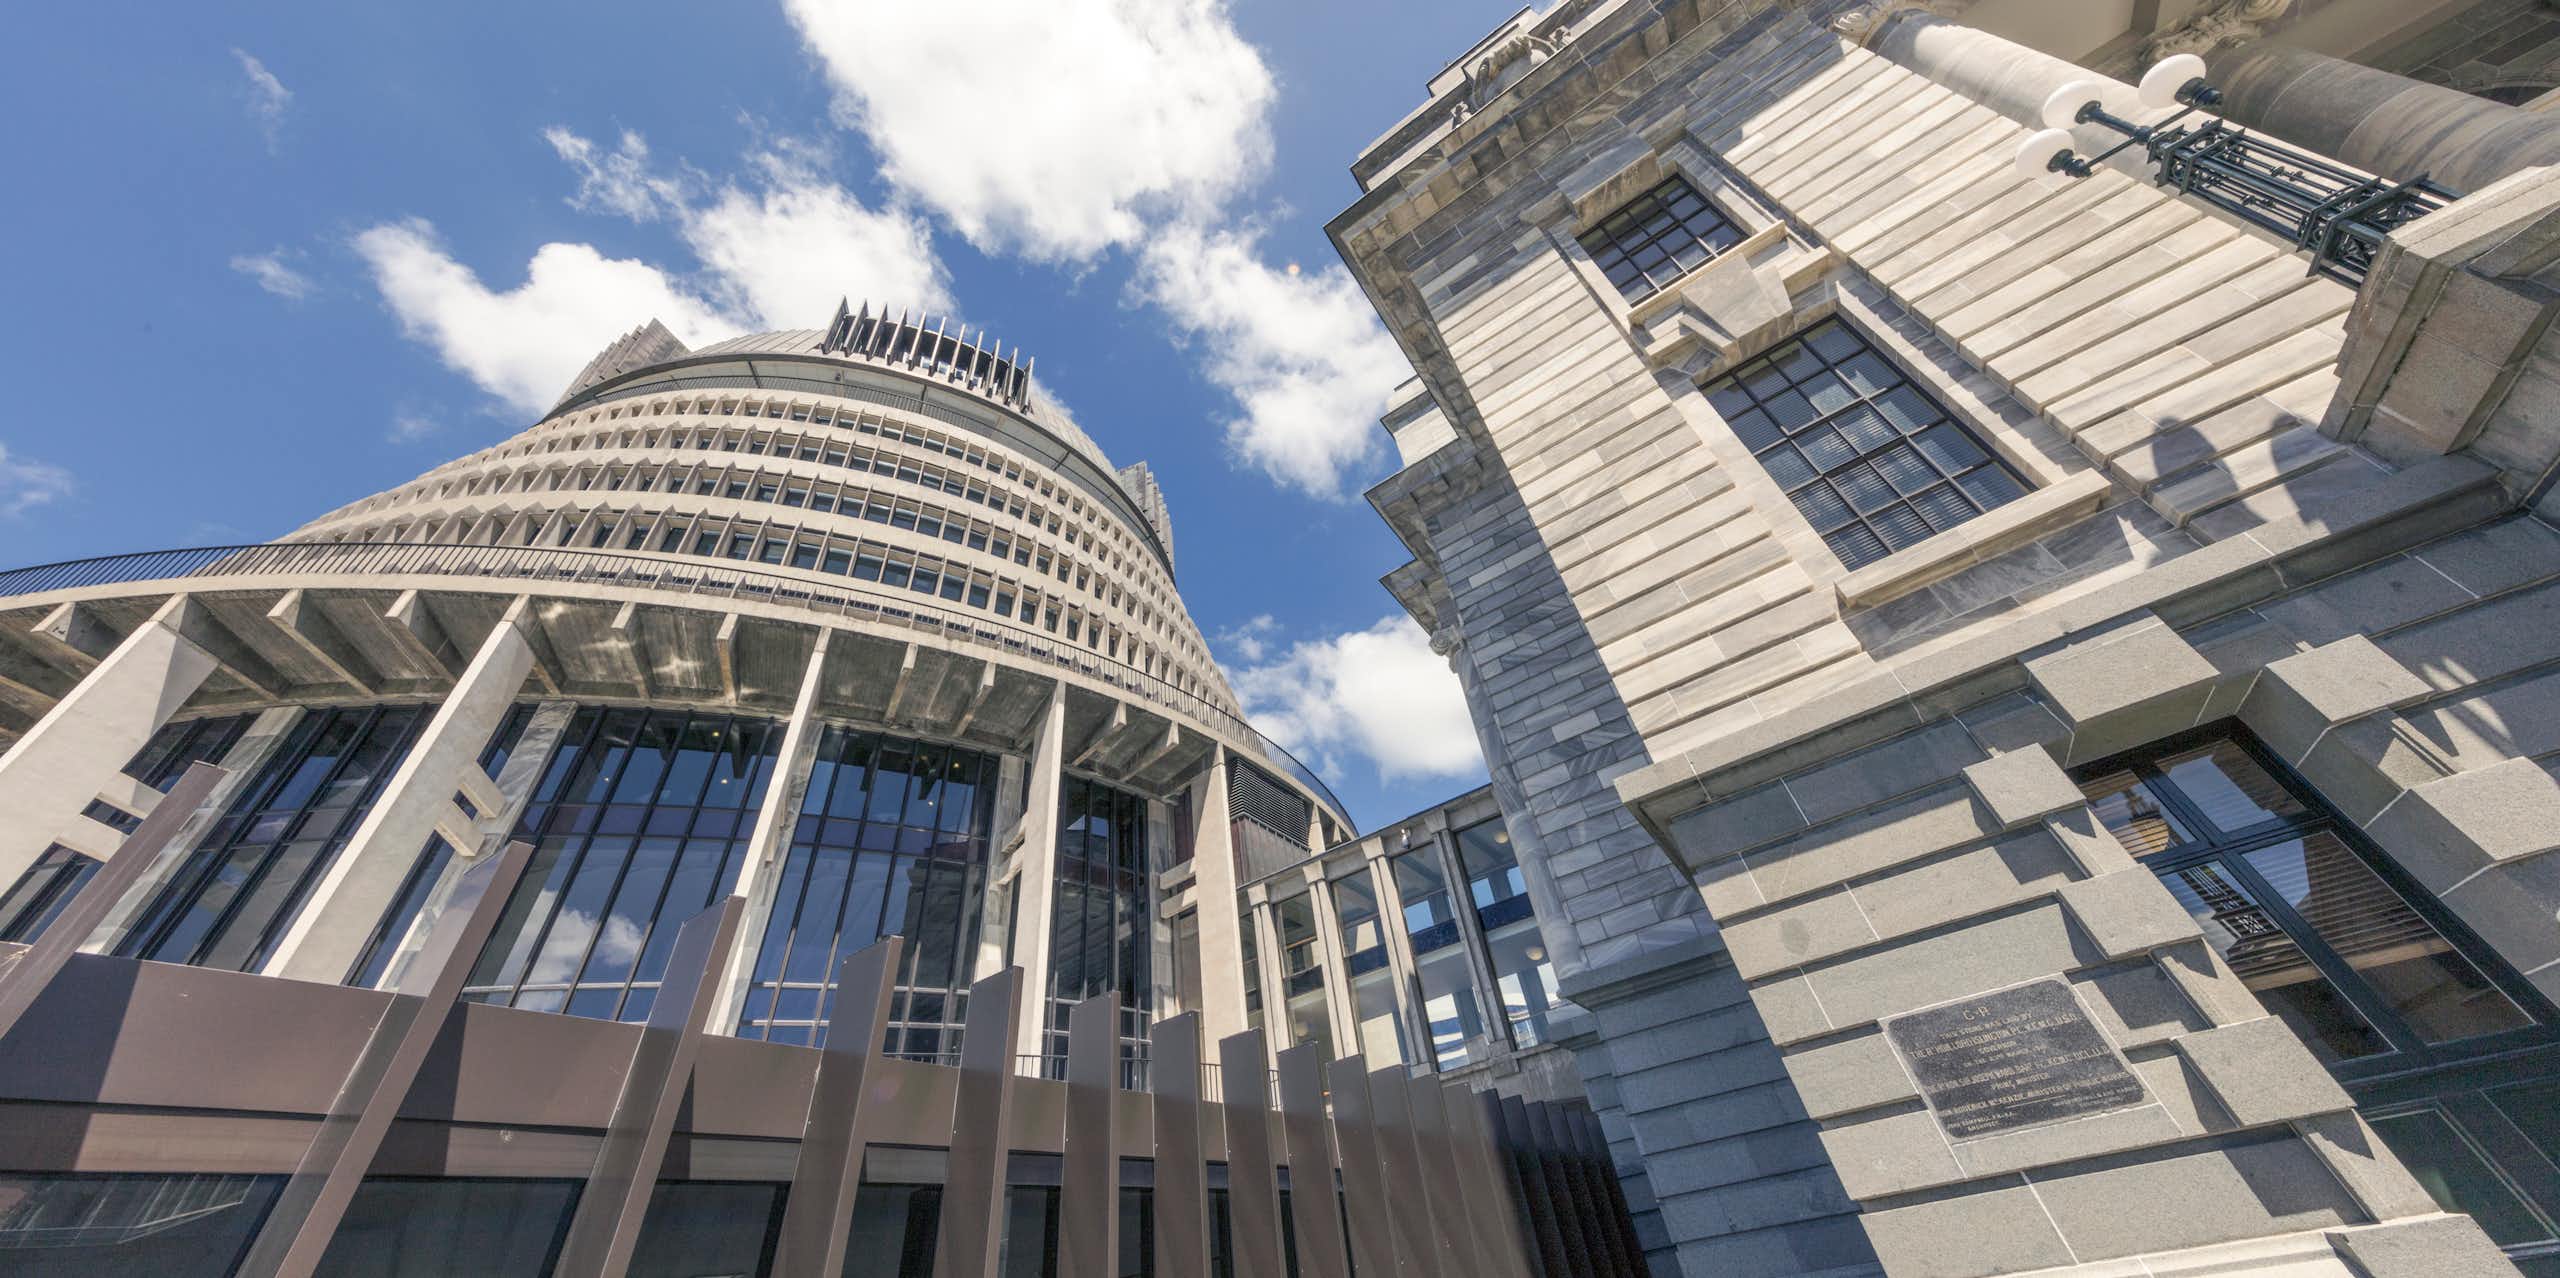 NZ parliament buildings